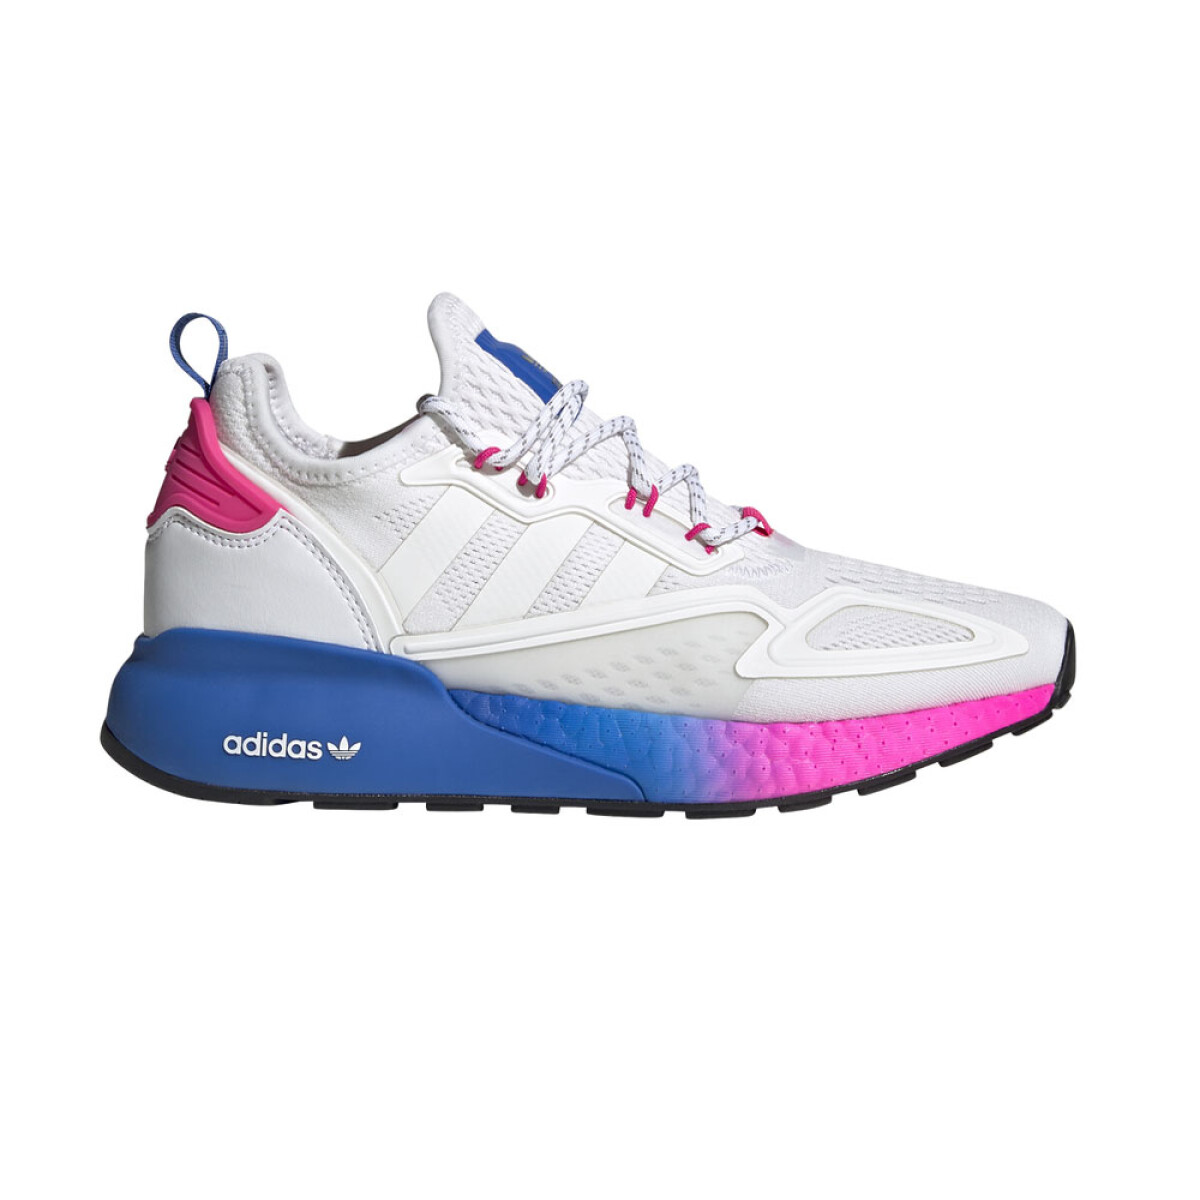 adidas ZX 2K BOOST W - White/Blue/Pink 